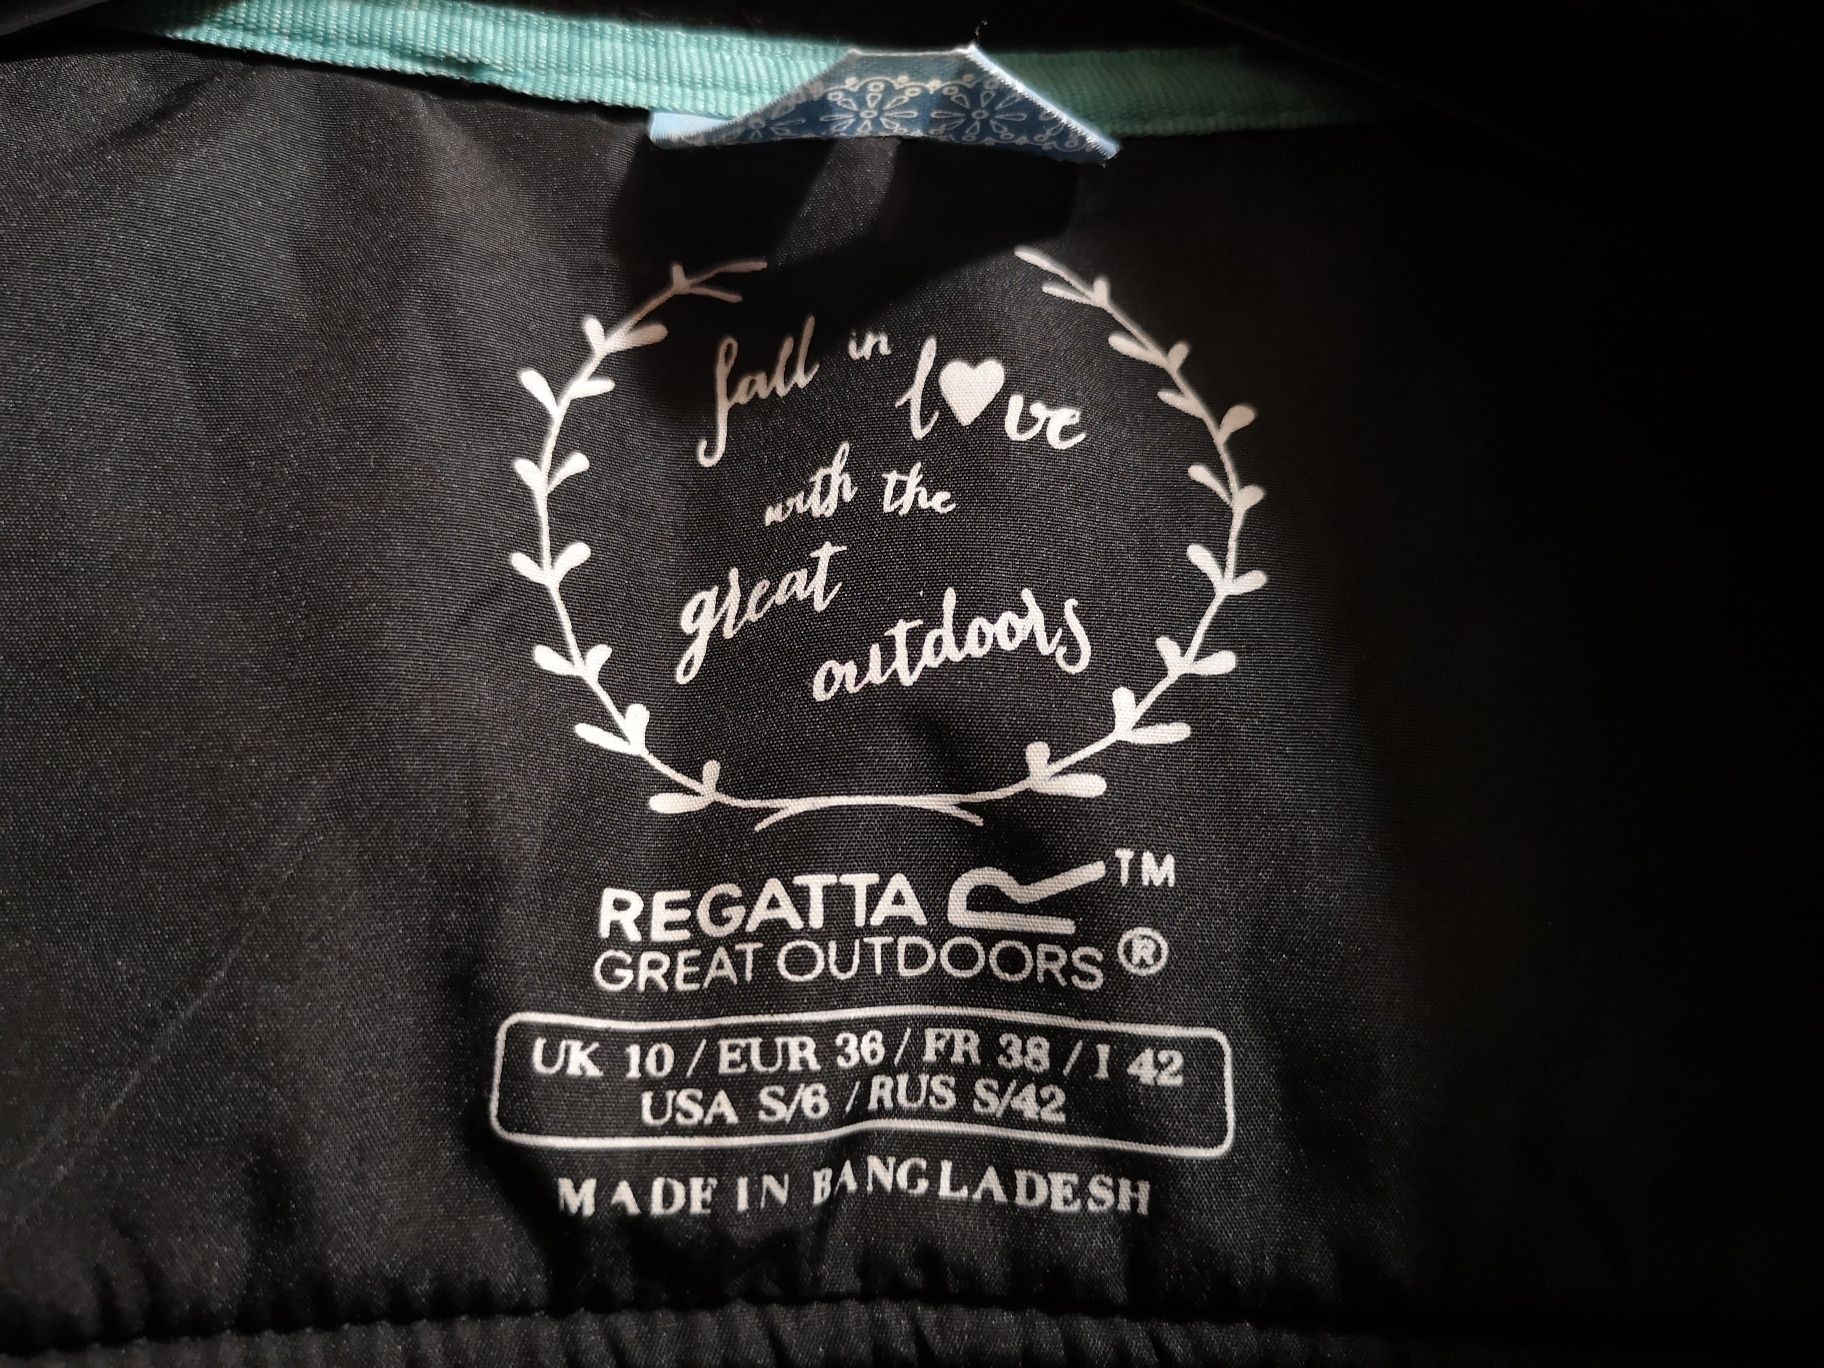 Bluza marki Regatta